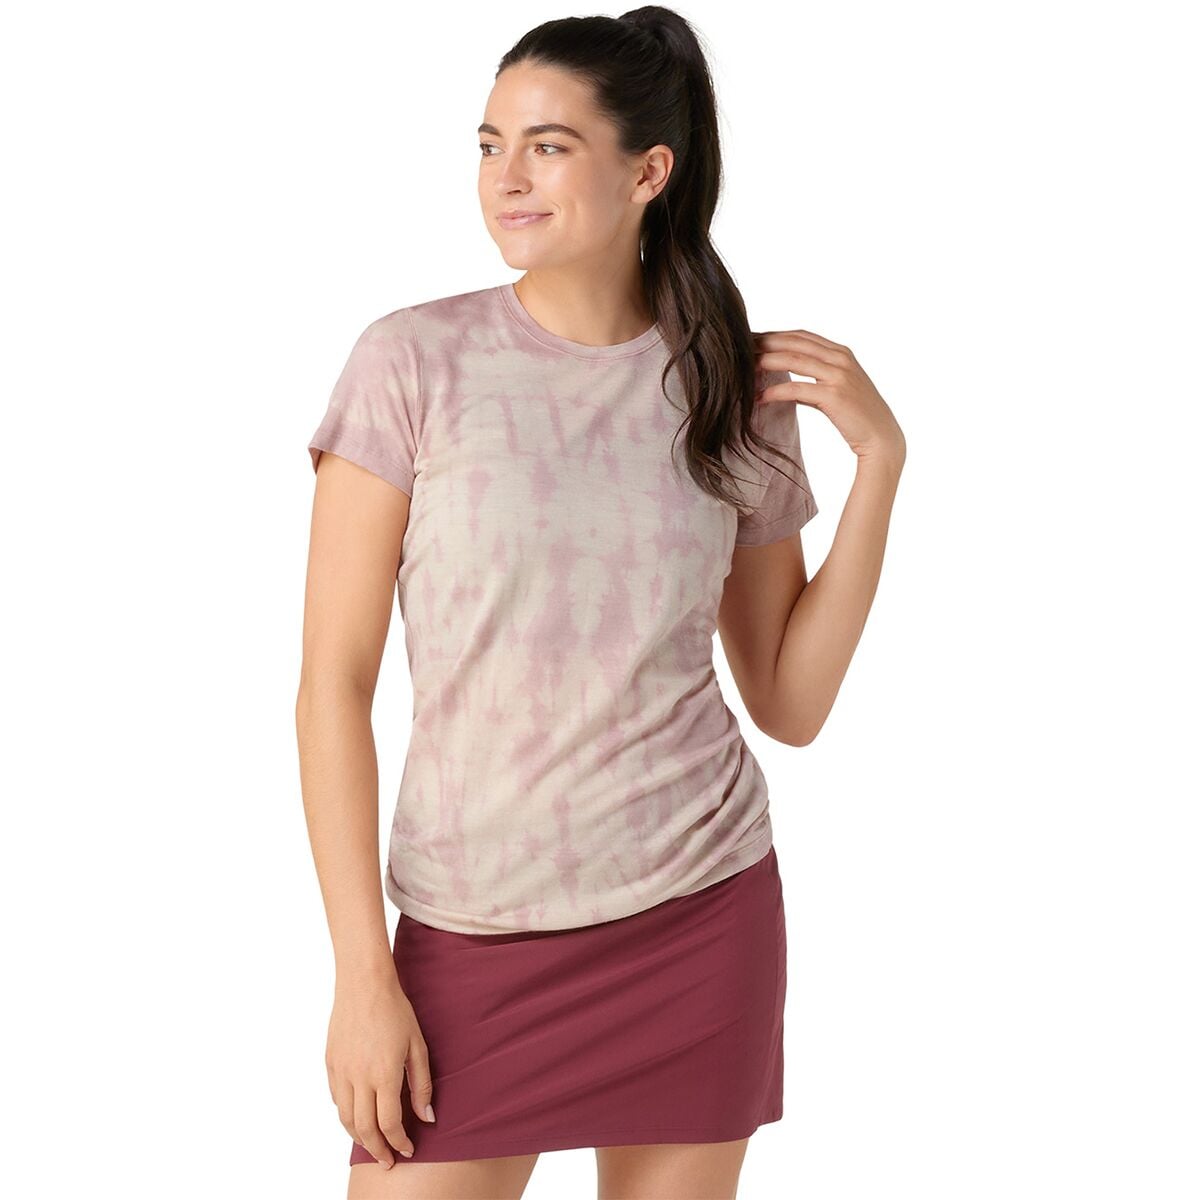 Smartwool Merino Plant-Based Dye Short-Sleeve T-Shirt - Women's Light Copper Tie Dye